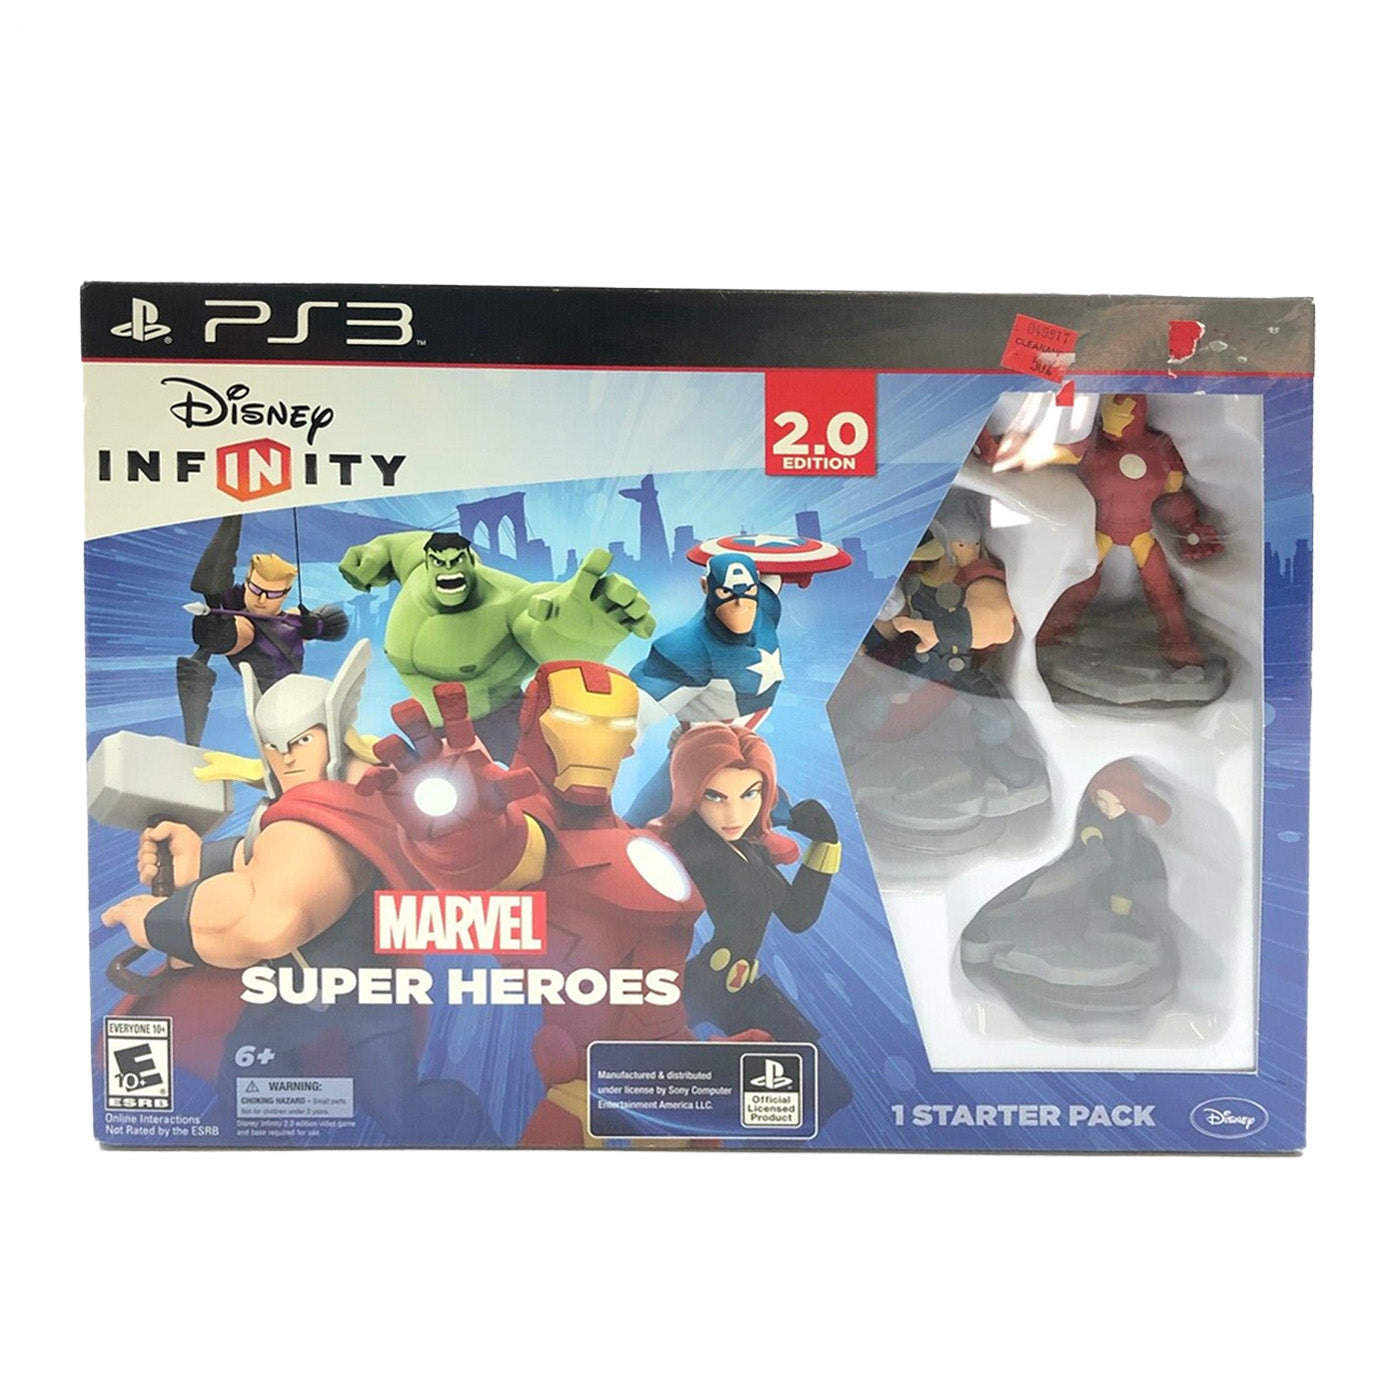 Disney Infinity 2.0: Marvel Super Heroes Starter Pack - PlayStation 3